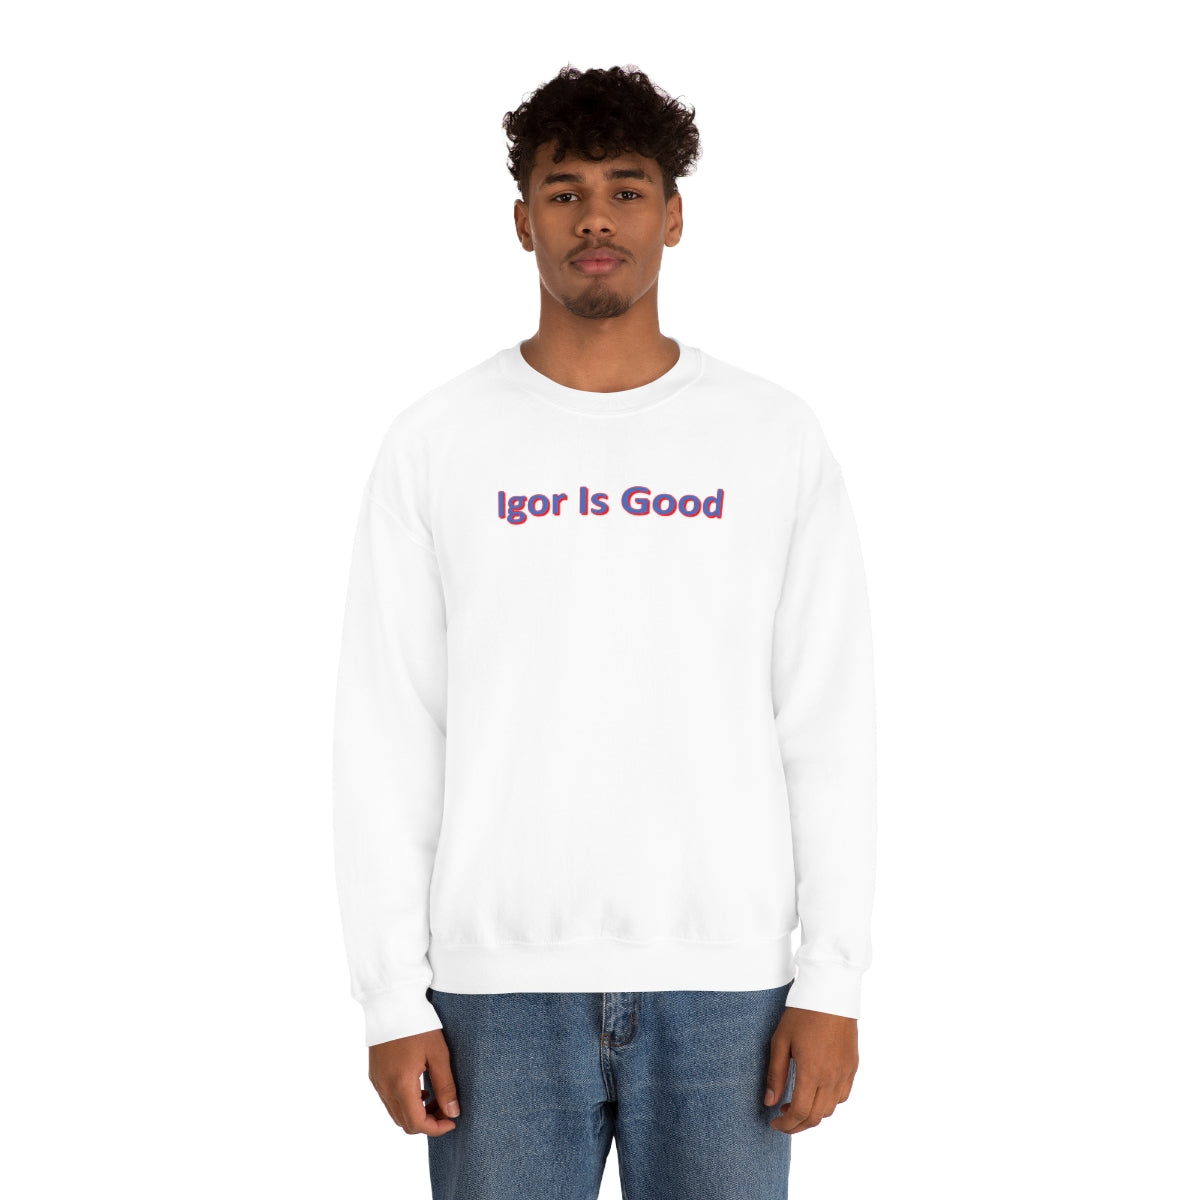 Igor Is Good  Sweater - IsGoodBrand